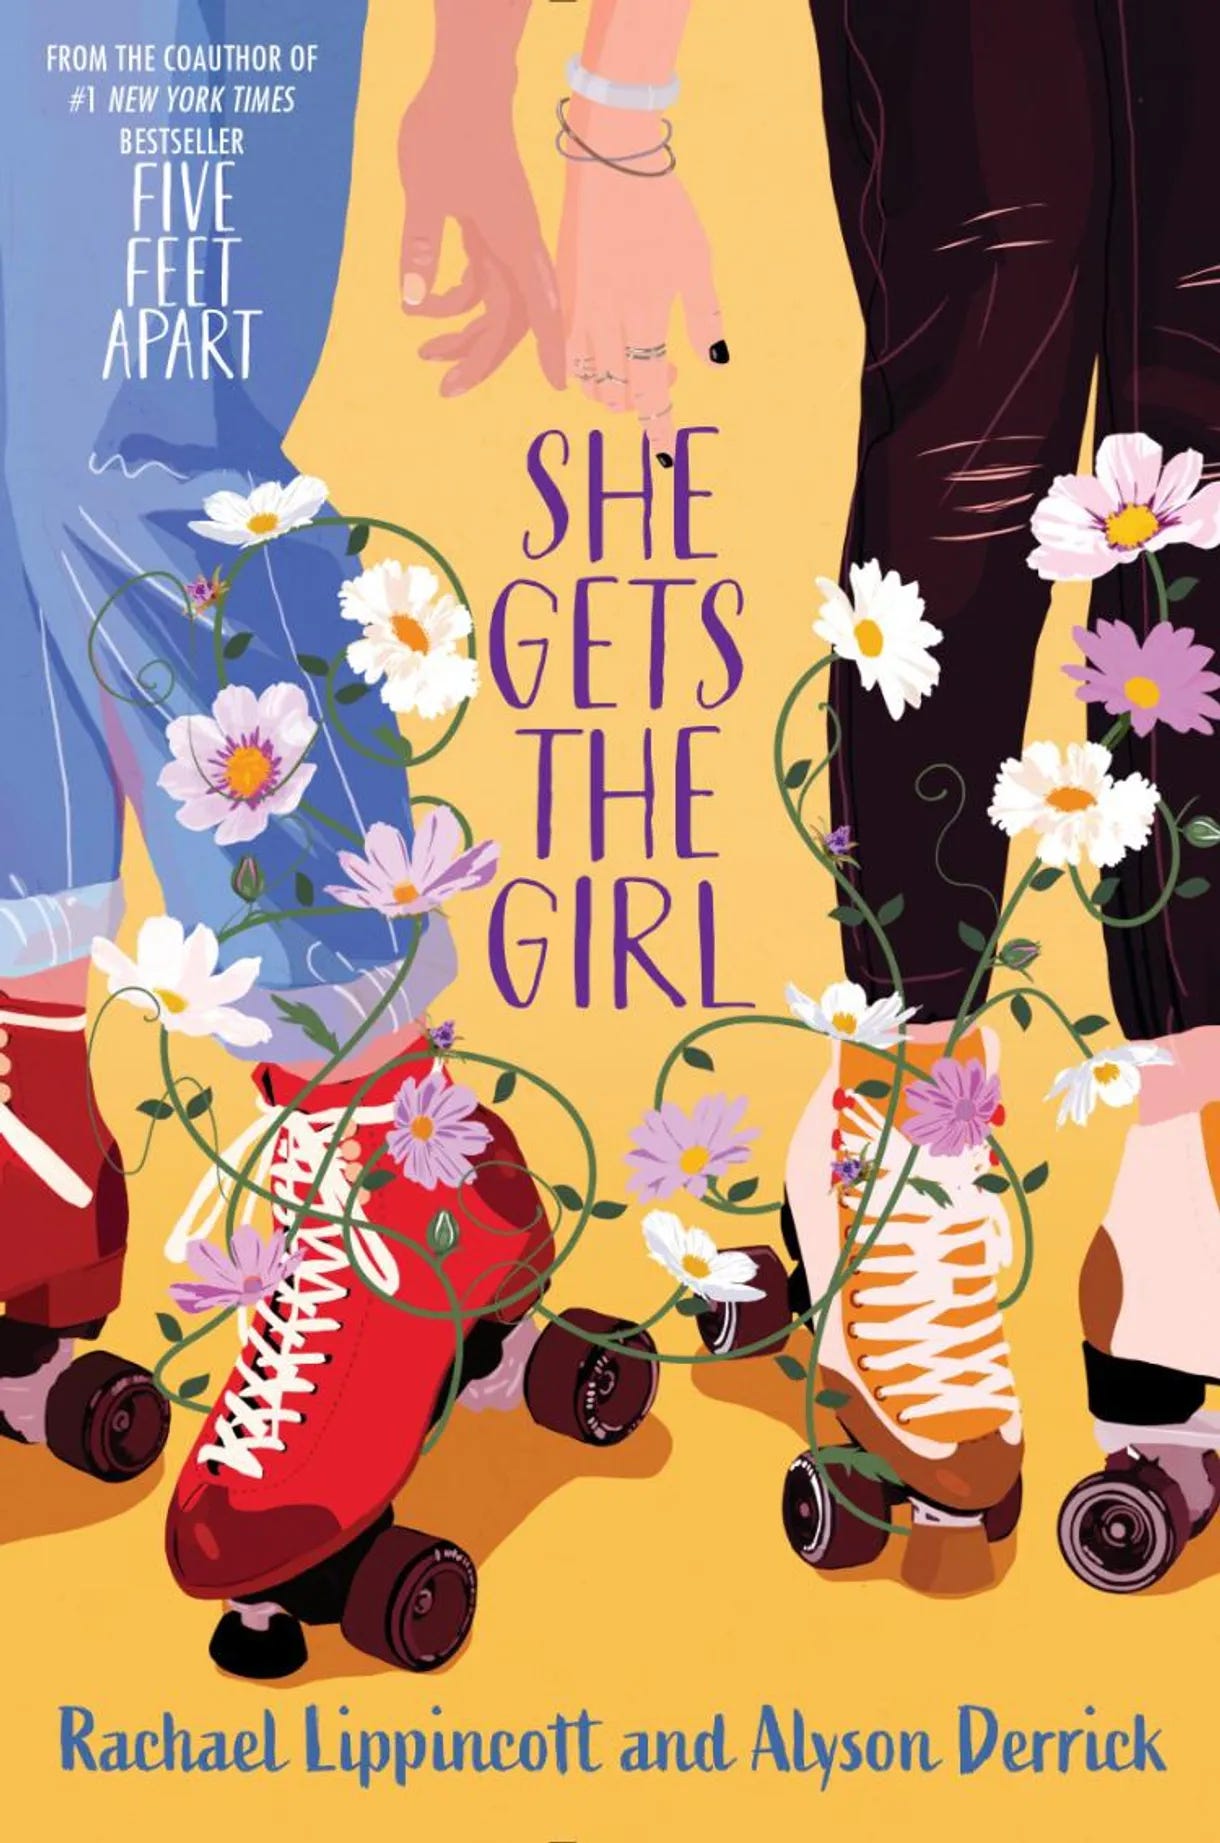 The cover art for the novel She Gets The Girl